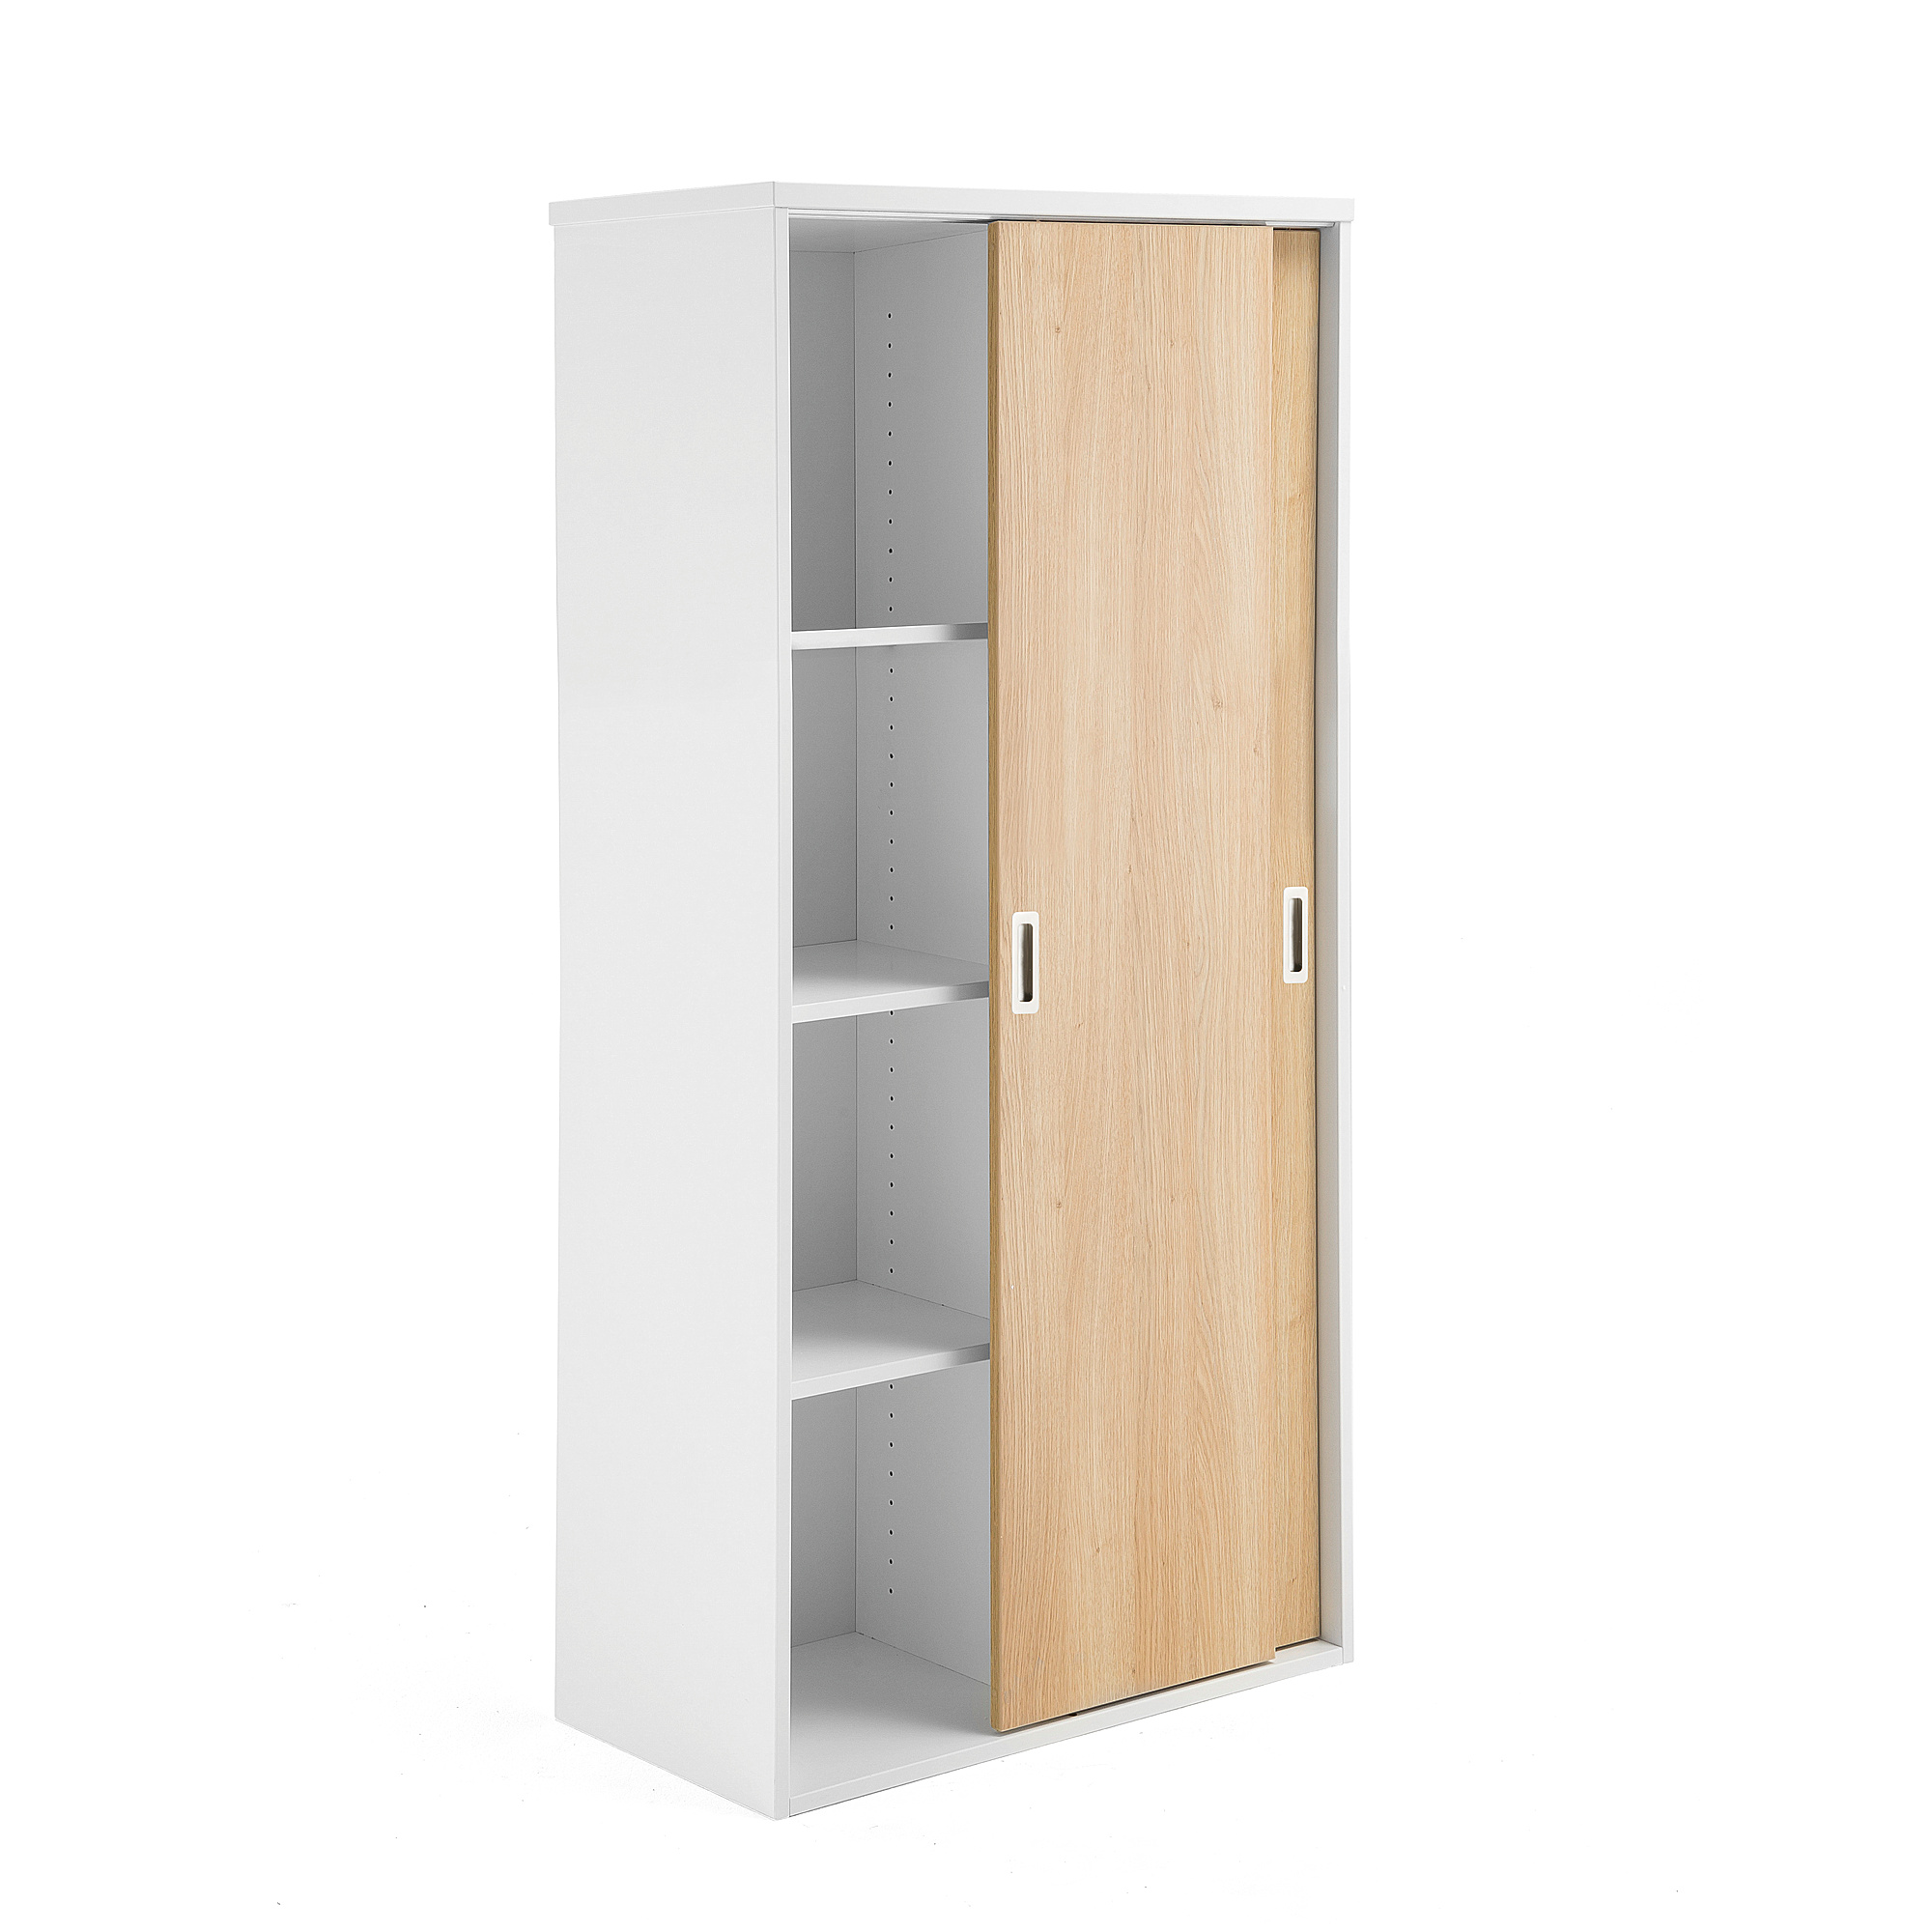 Kancelárska skriňa s posuvnými dverami MODULUS, 1600x800 mm, biela / dub